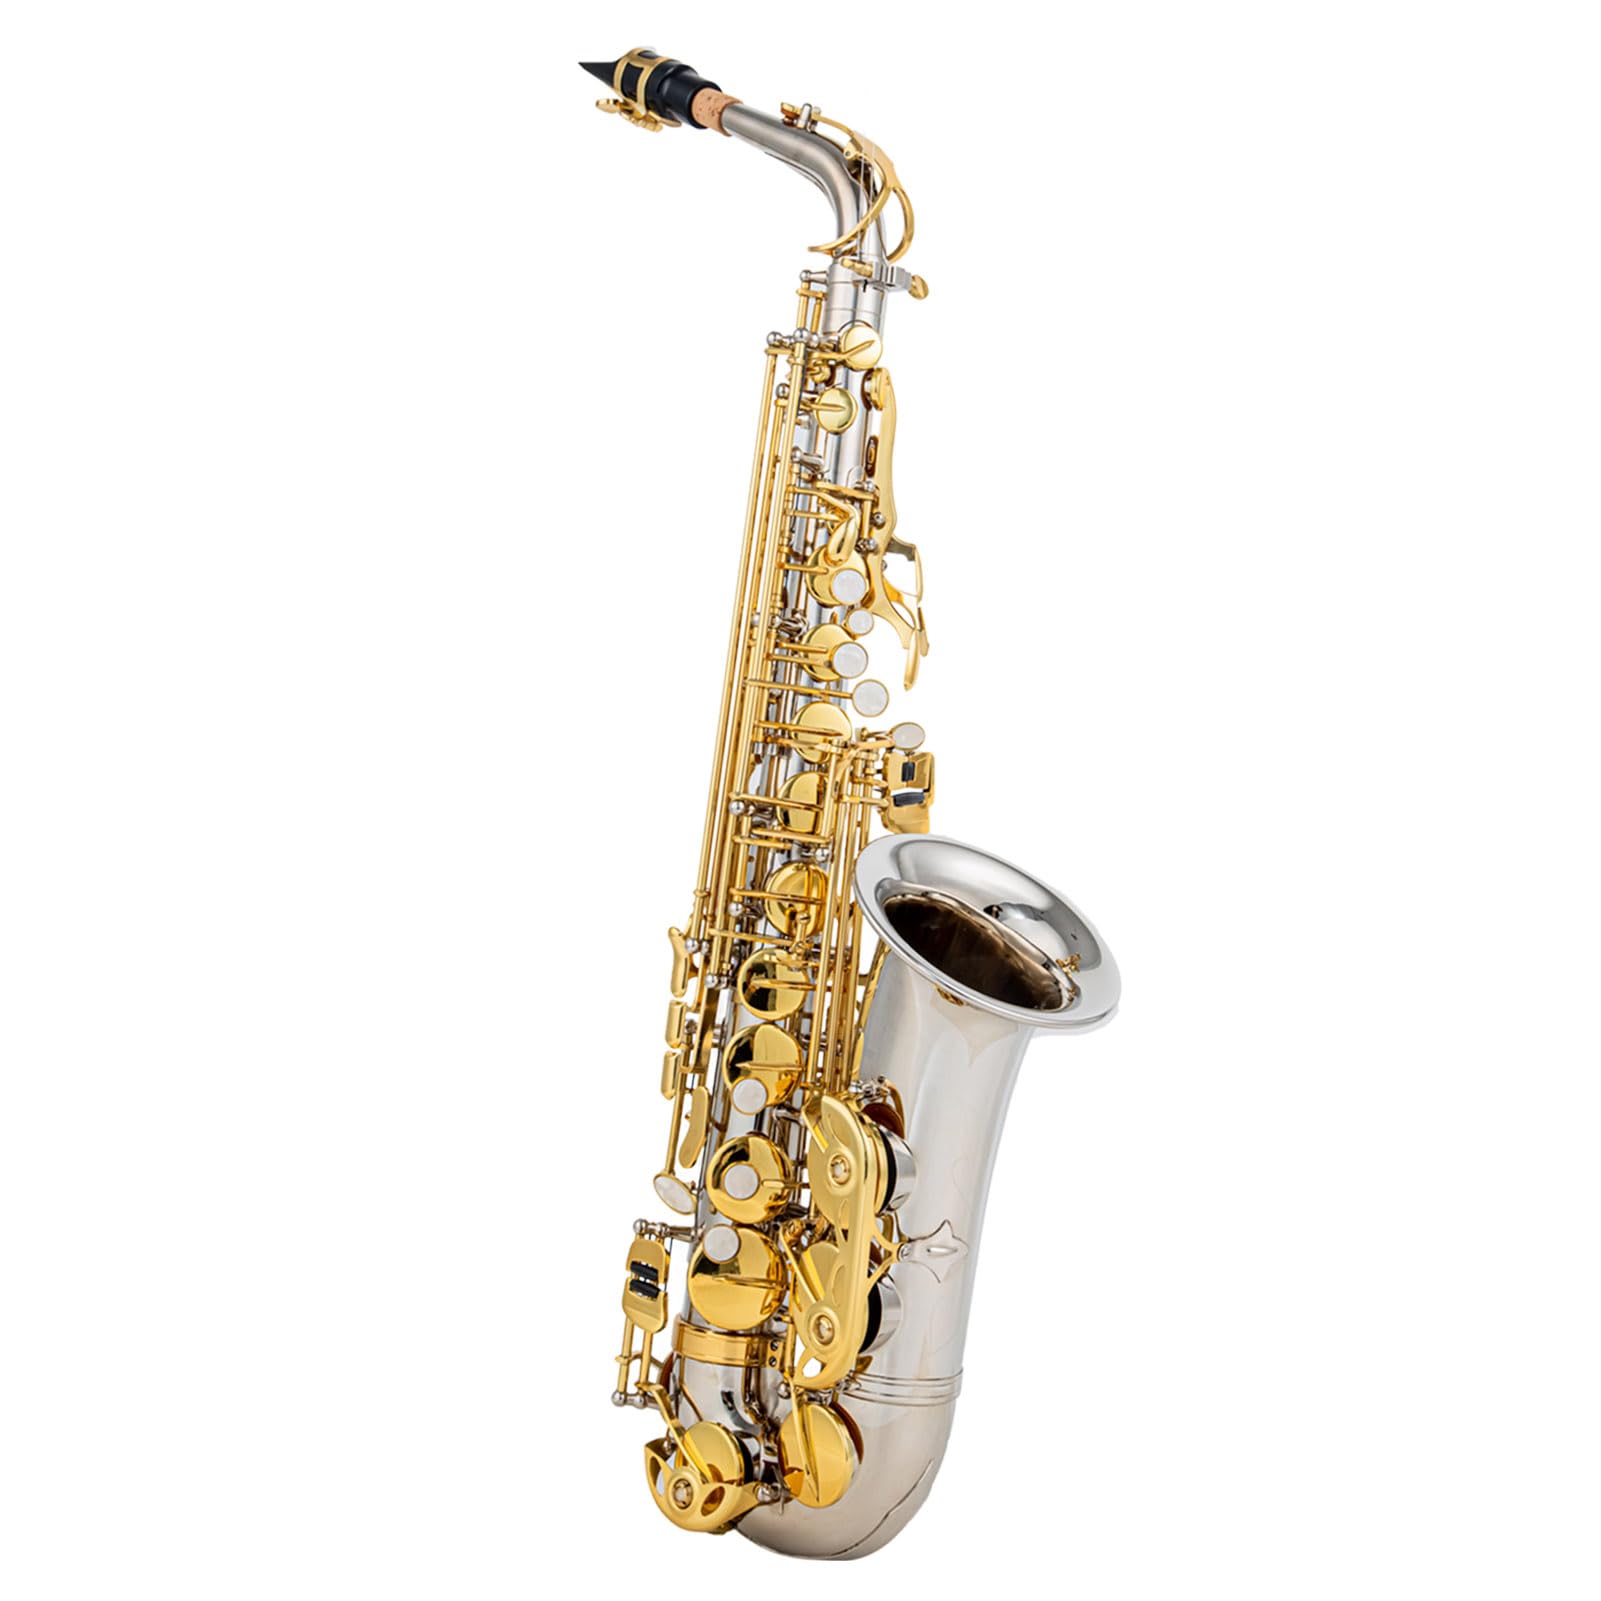 Saxophon,KOCAN Eb Altsaxophon Messing E Flat Sax 802 Tastentyp Holzblasinstrument mit Putzstock,Tuch,Handschuhen,Riemen,gepolsterter Koffer,Eb-Altsaxophon